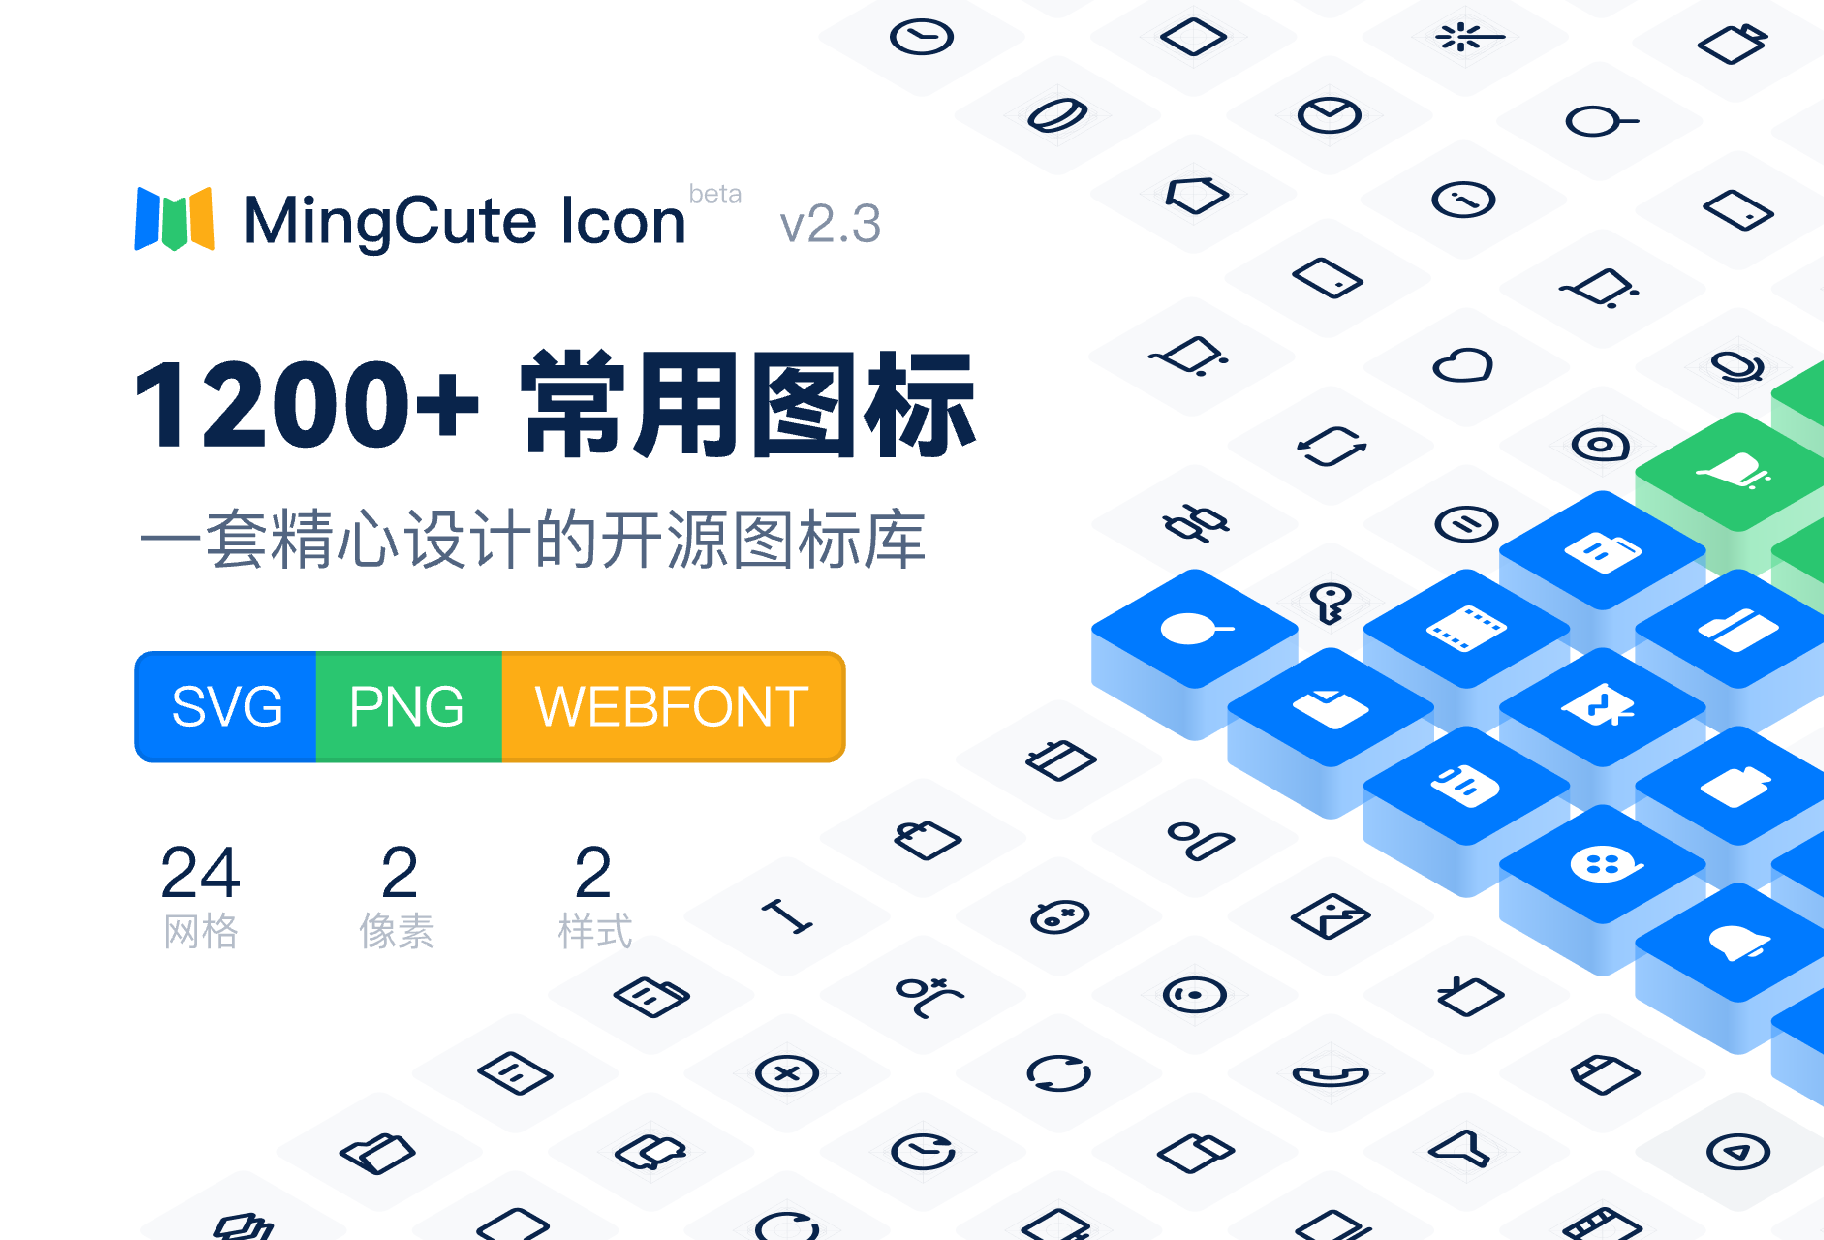 1200+常用图标集 MingCute Icon